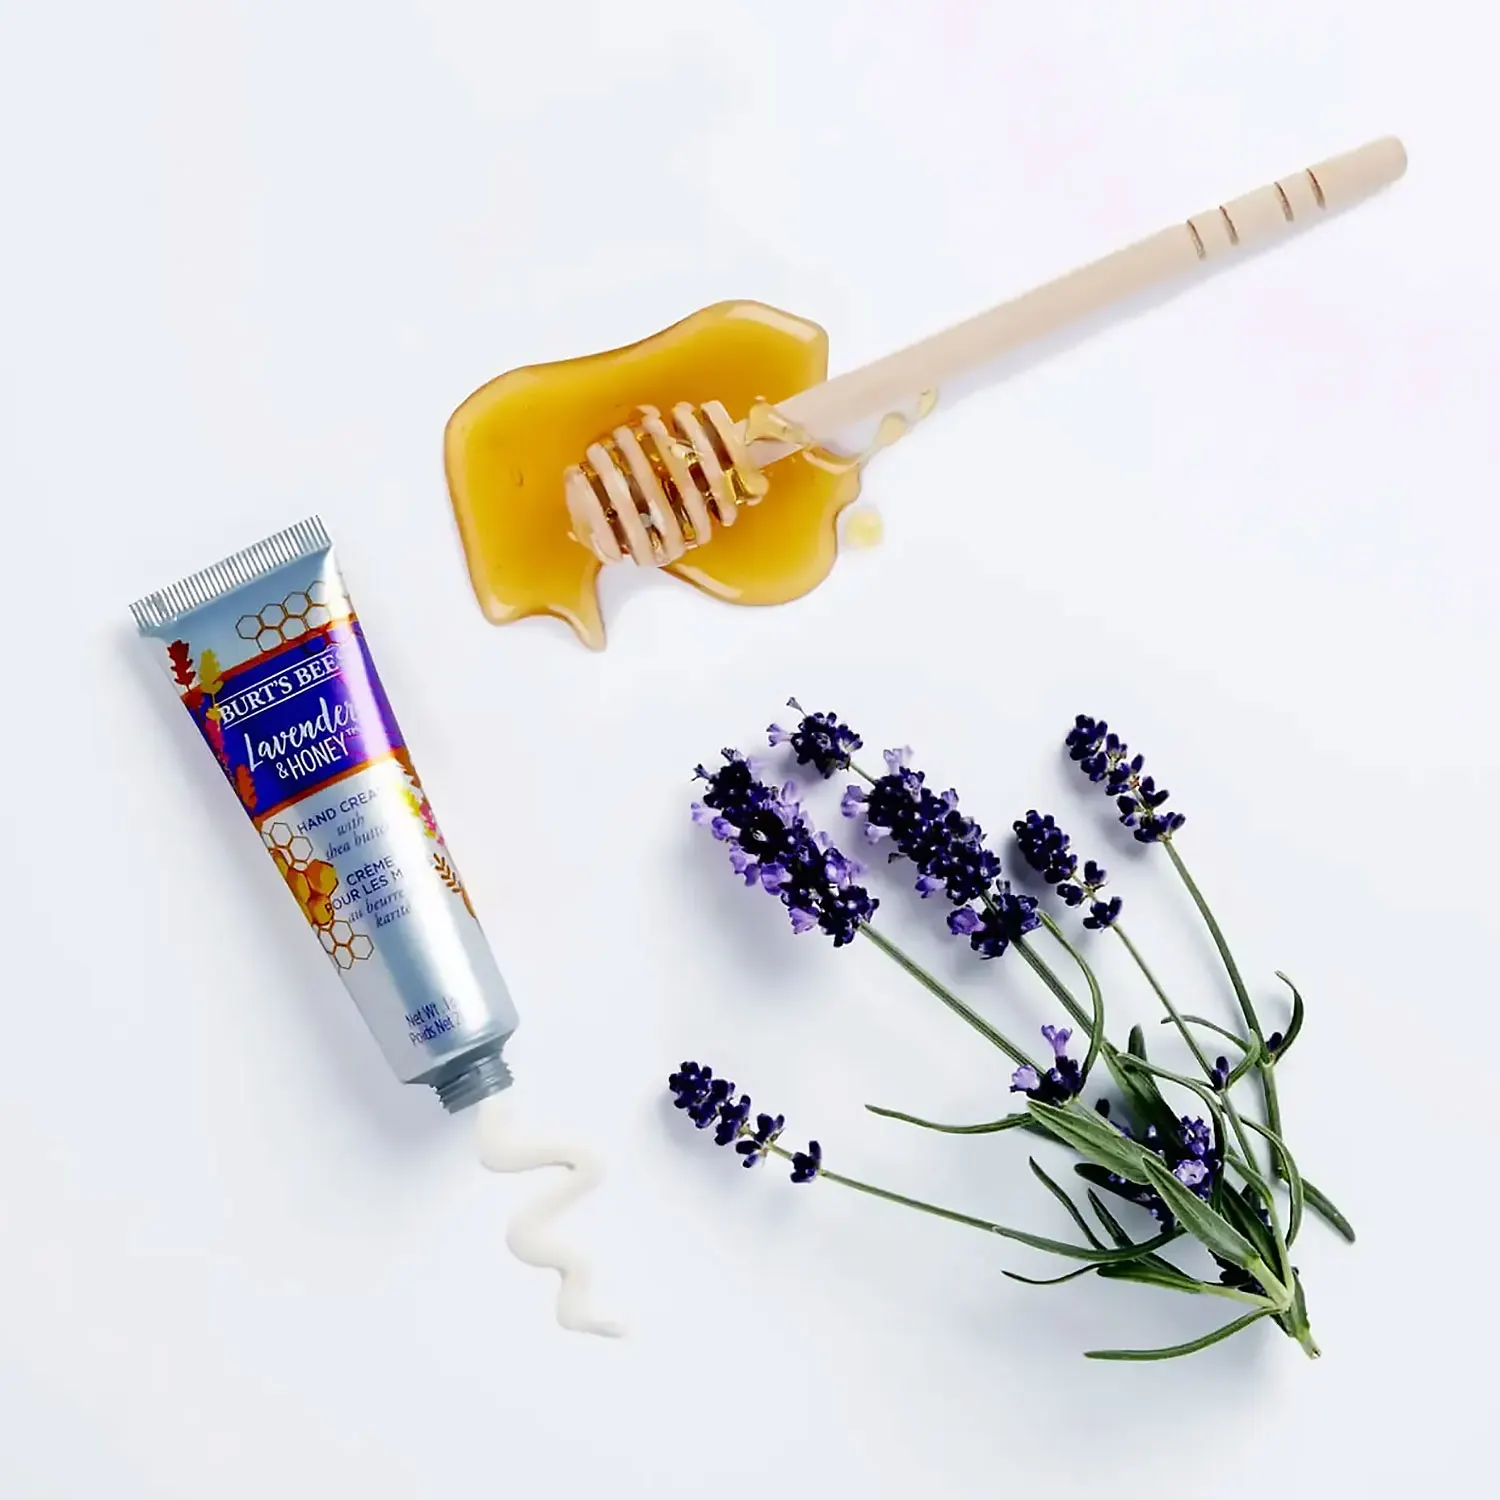 lavender & honey hand cream with honey dripper and lavender sprig